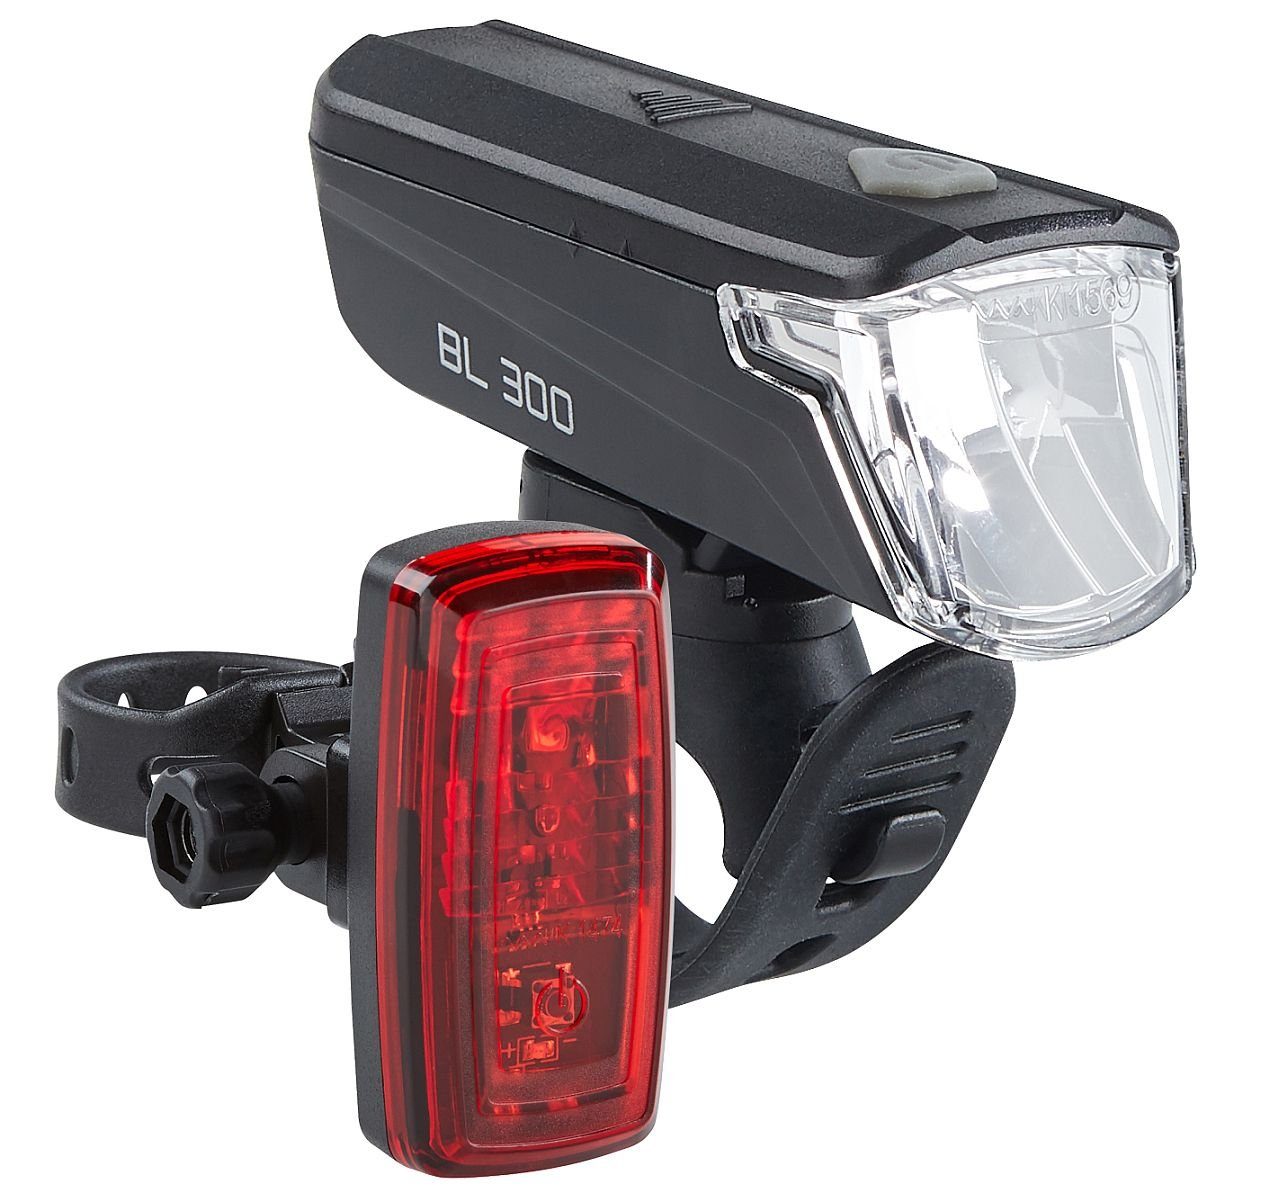 Büchel Fahrradbeleuchtung Fahrrad LED Batterie Lampen Set 30/15 Lux BL300  Frontlicht + Rücklicht